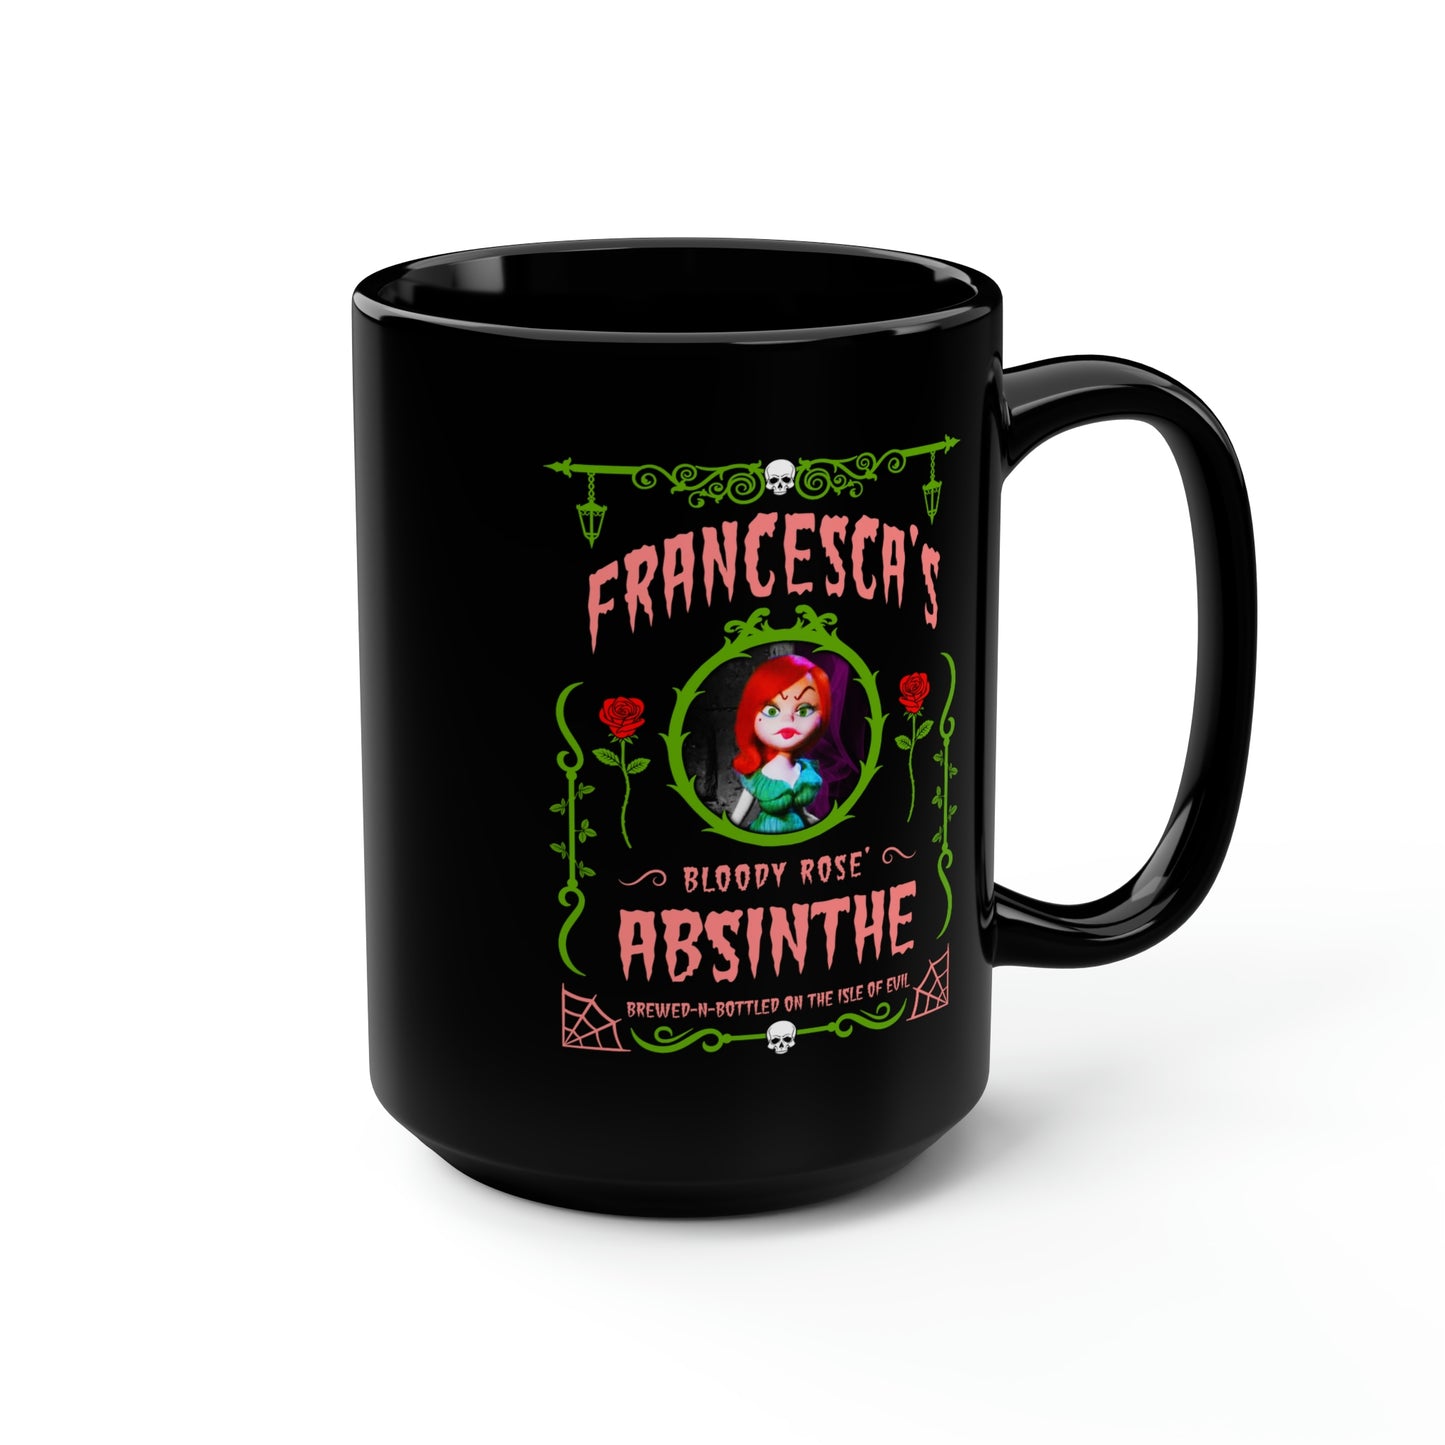 ABSINTHE MONSTERS 15 (FRANCESCA) Black Mug, 15oz